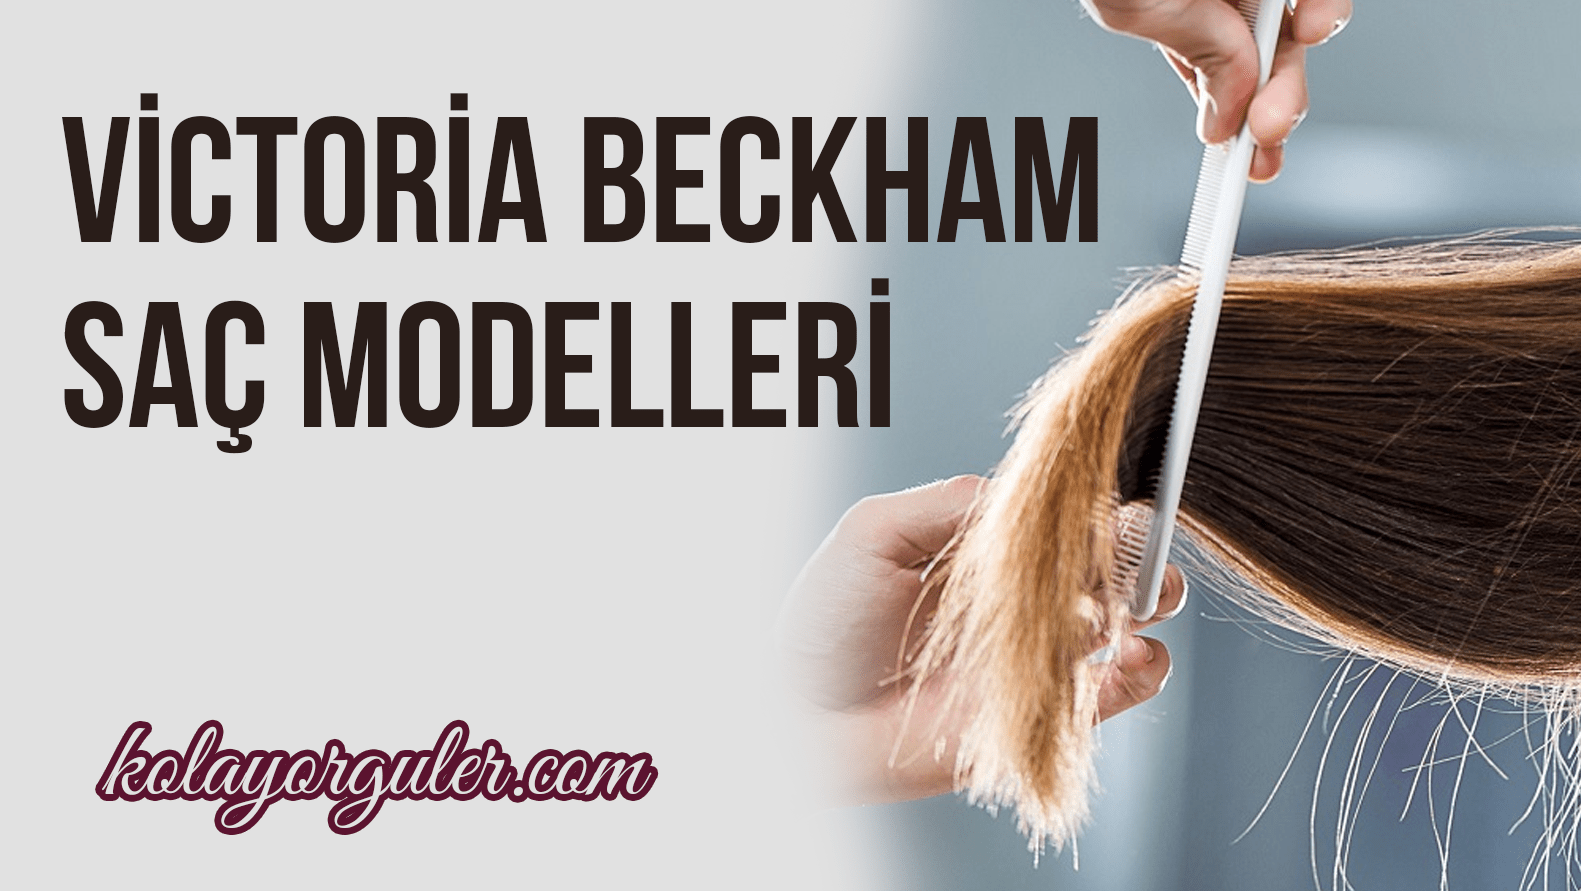 Victoria Beckham Saç Modelleri